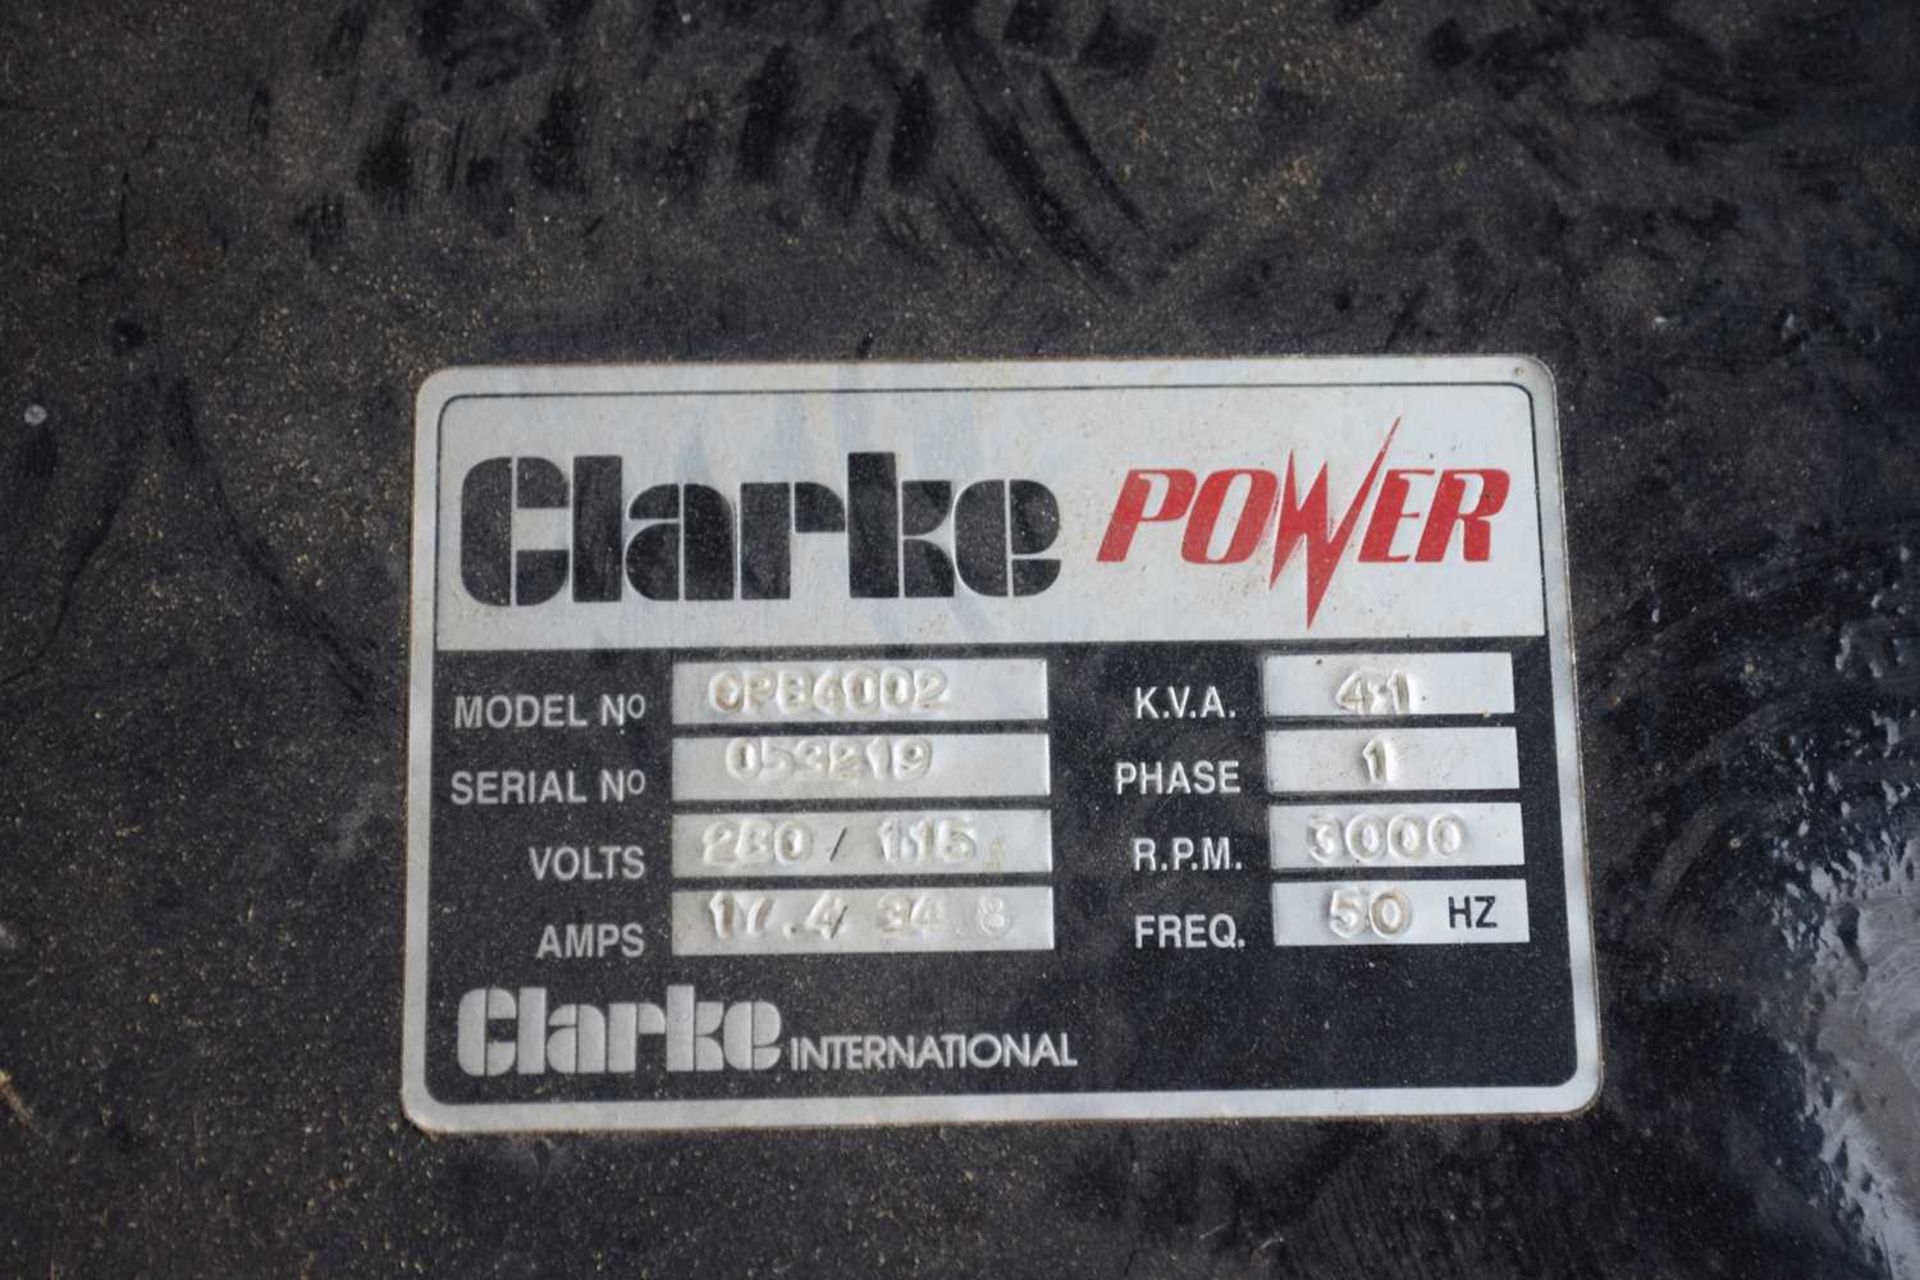 Clark power generator model number OPB6002 - Image 3 of 3